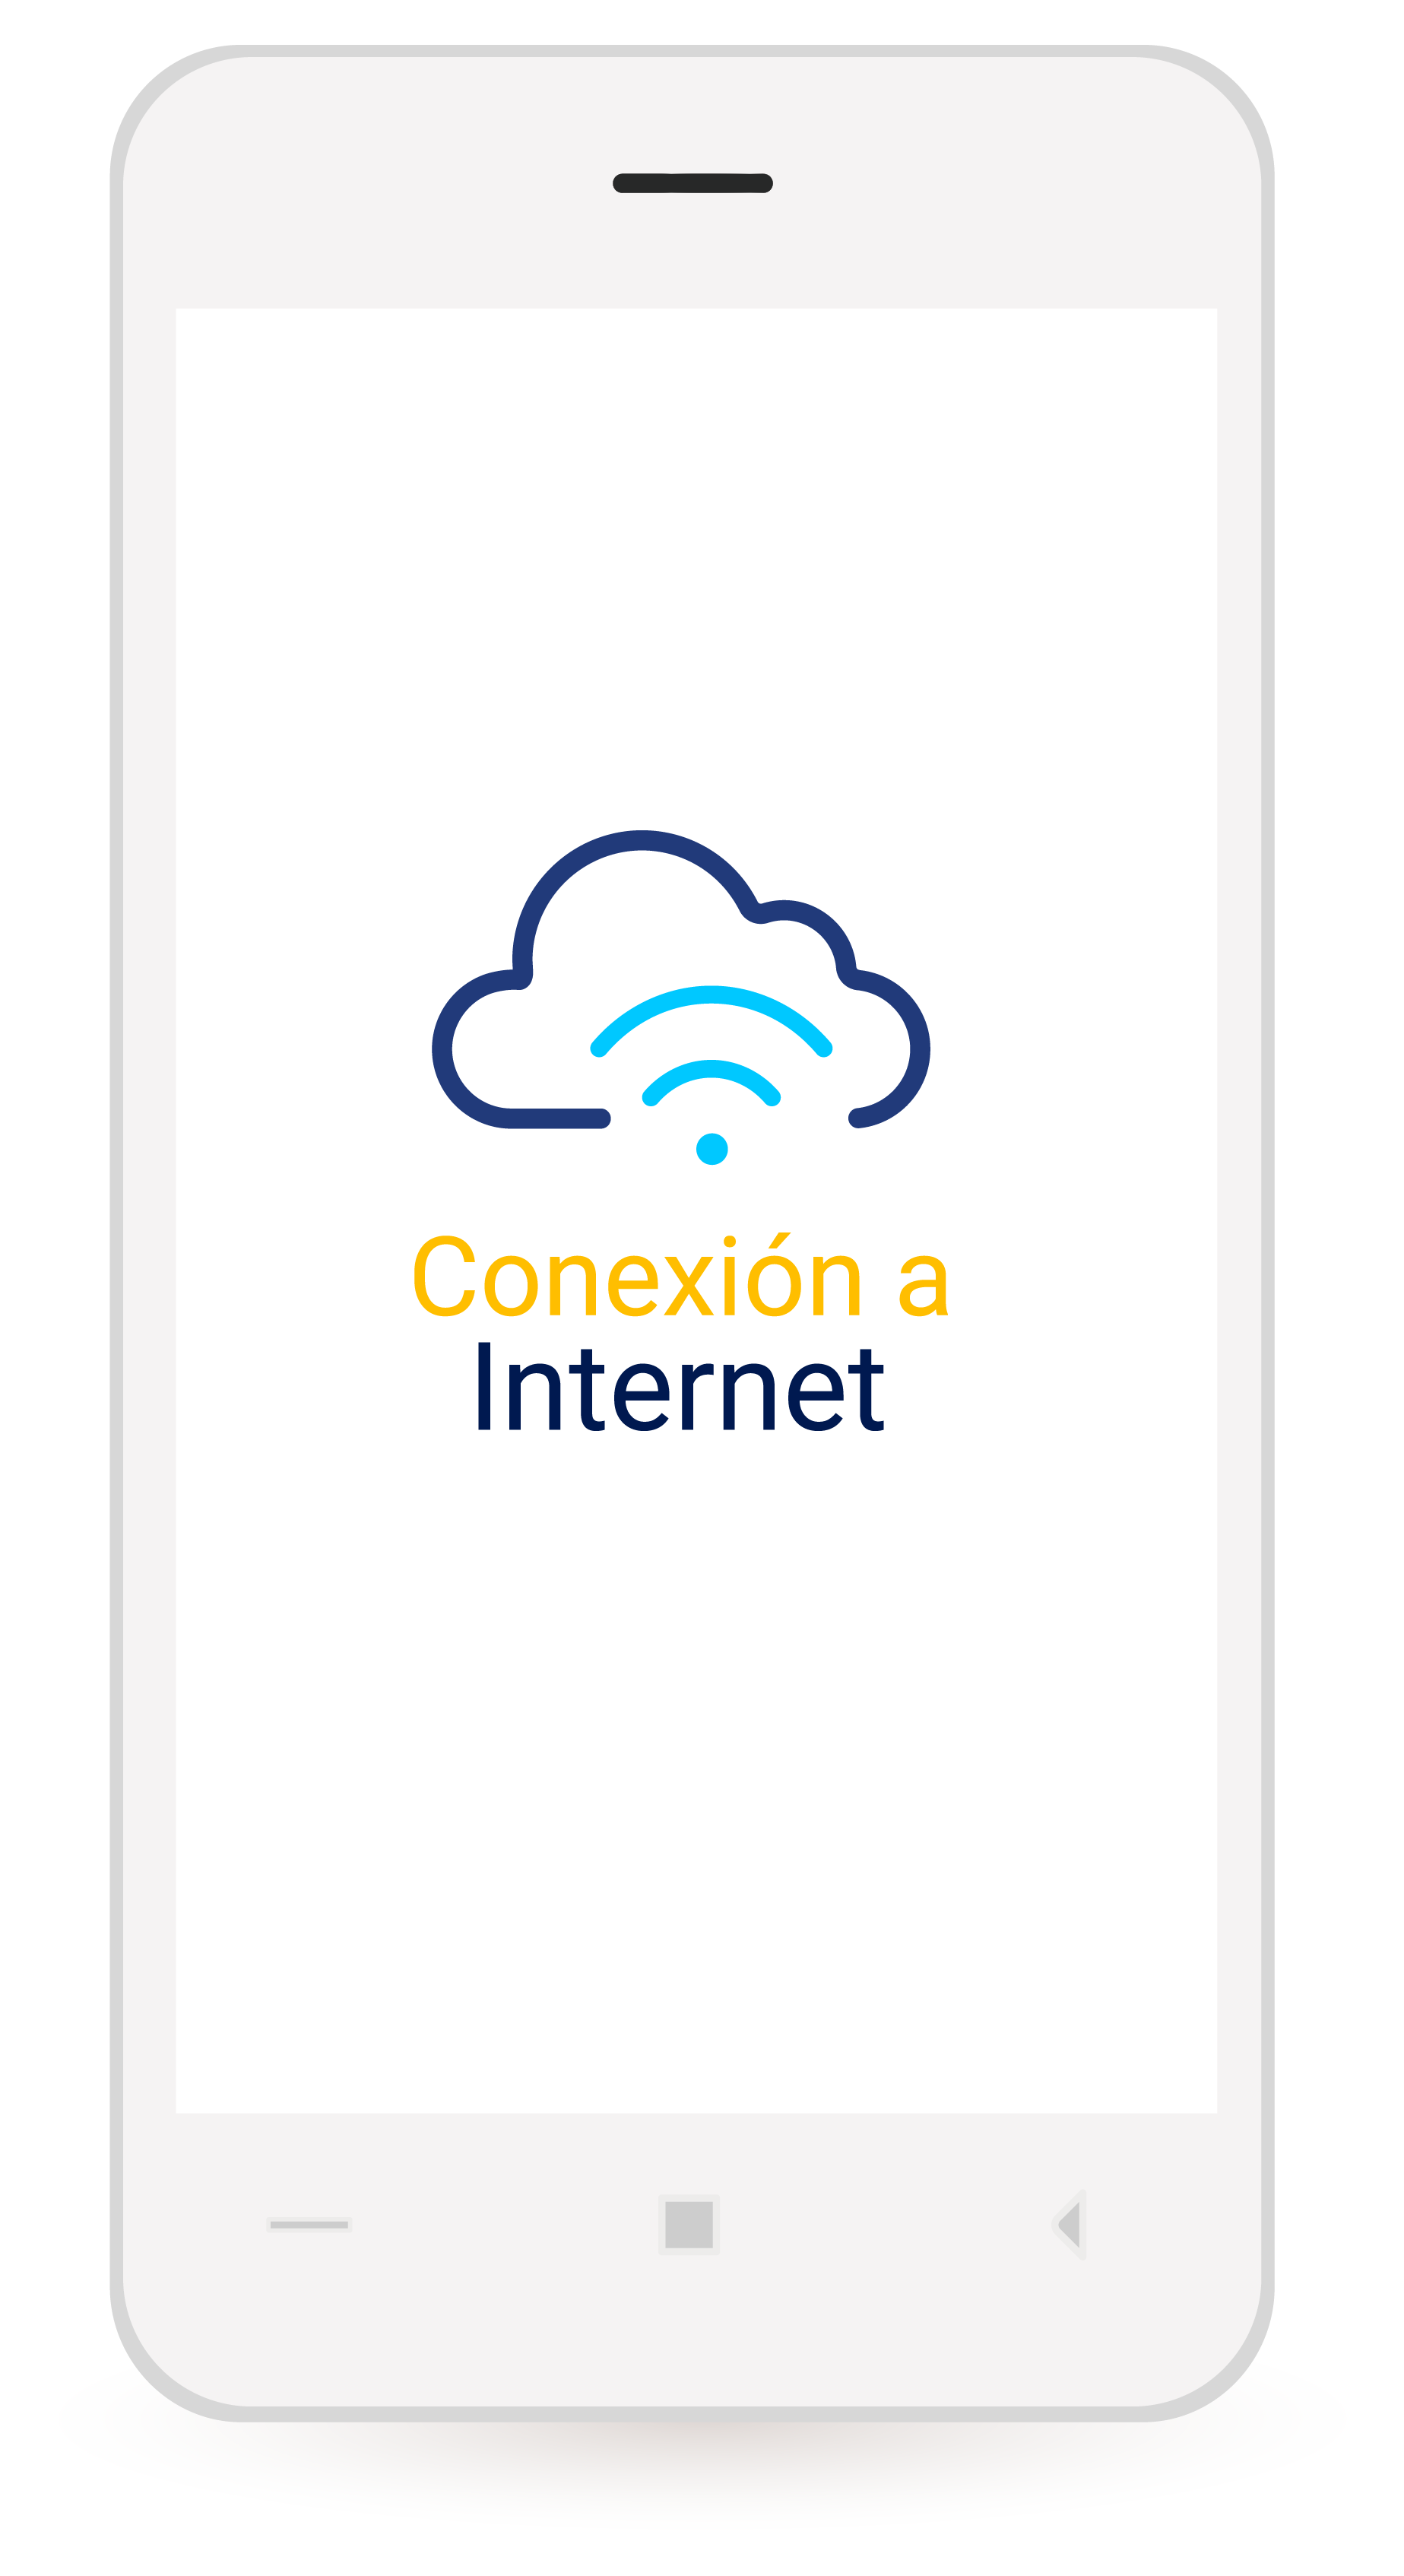 aw-Chip-Tigo-Conexion-Internet.png